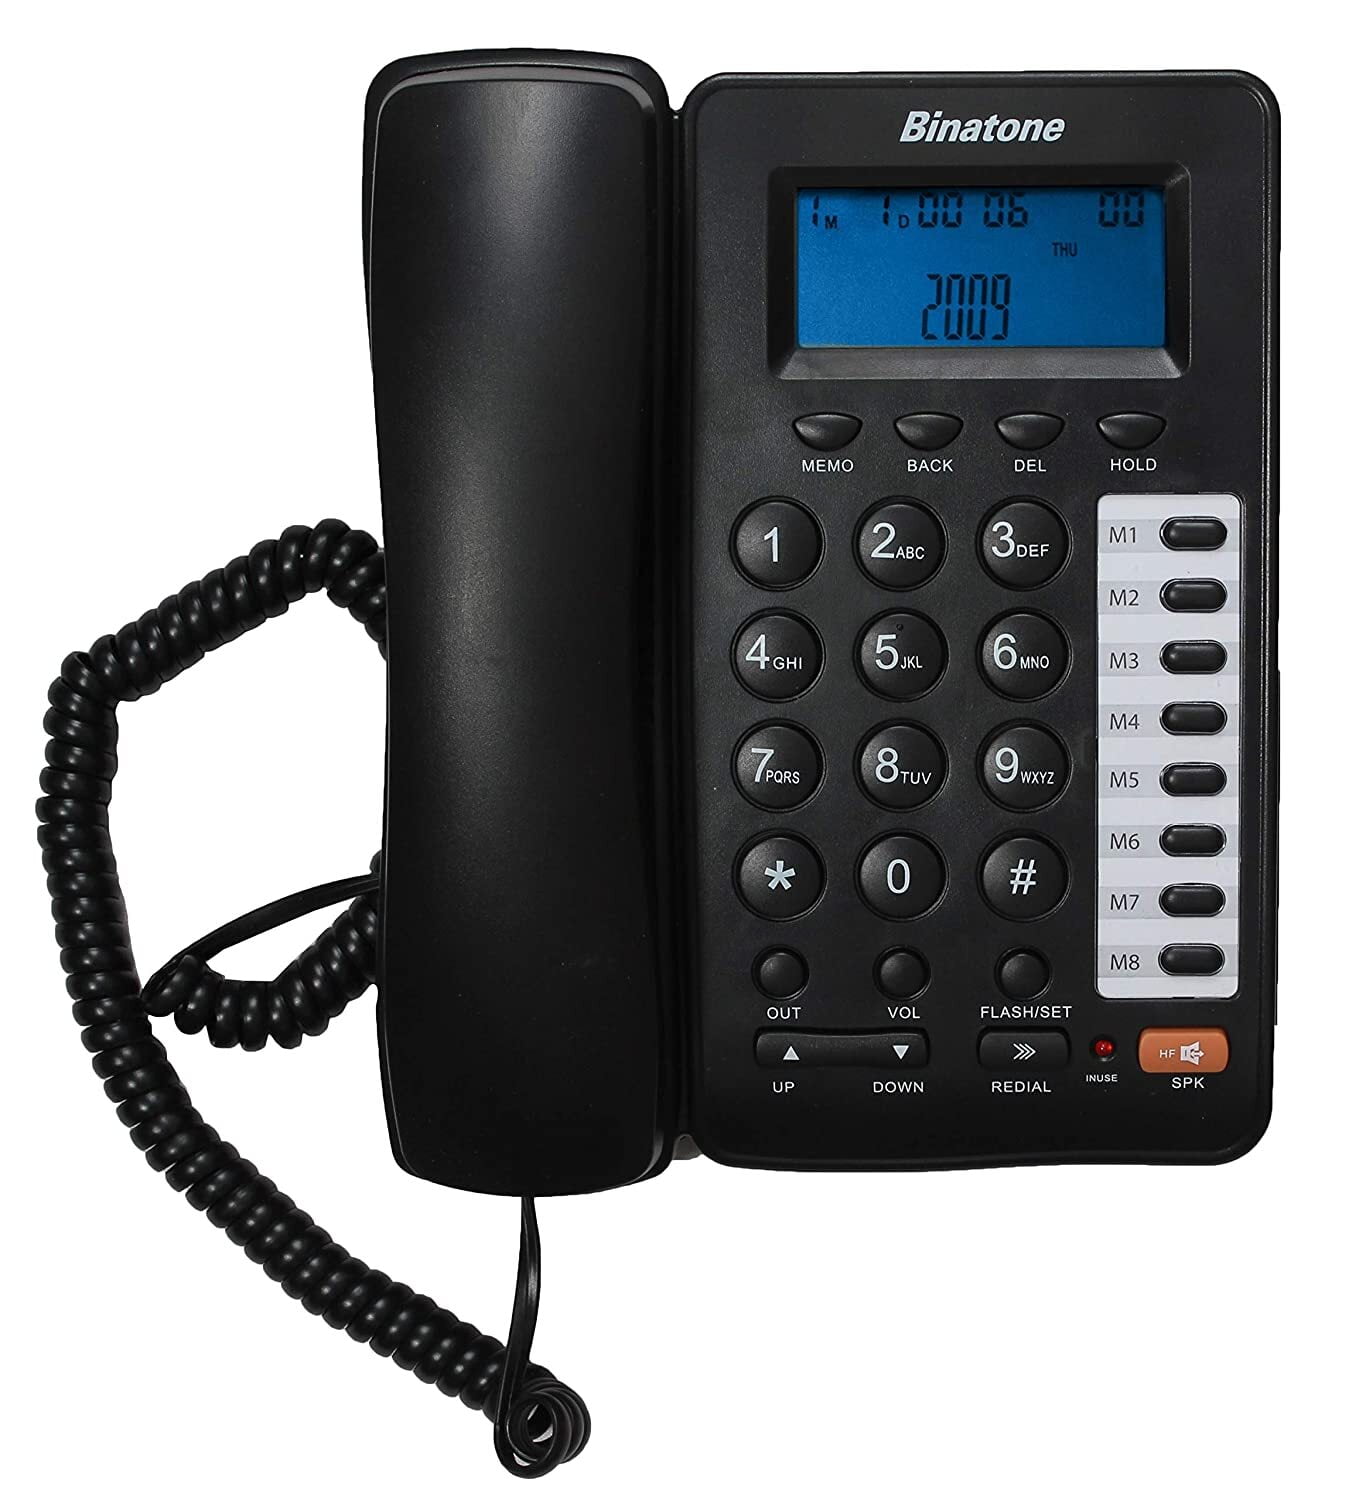 Binatone Concept 800 Corded Landline Phone On Dillimall.Com